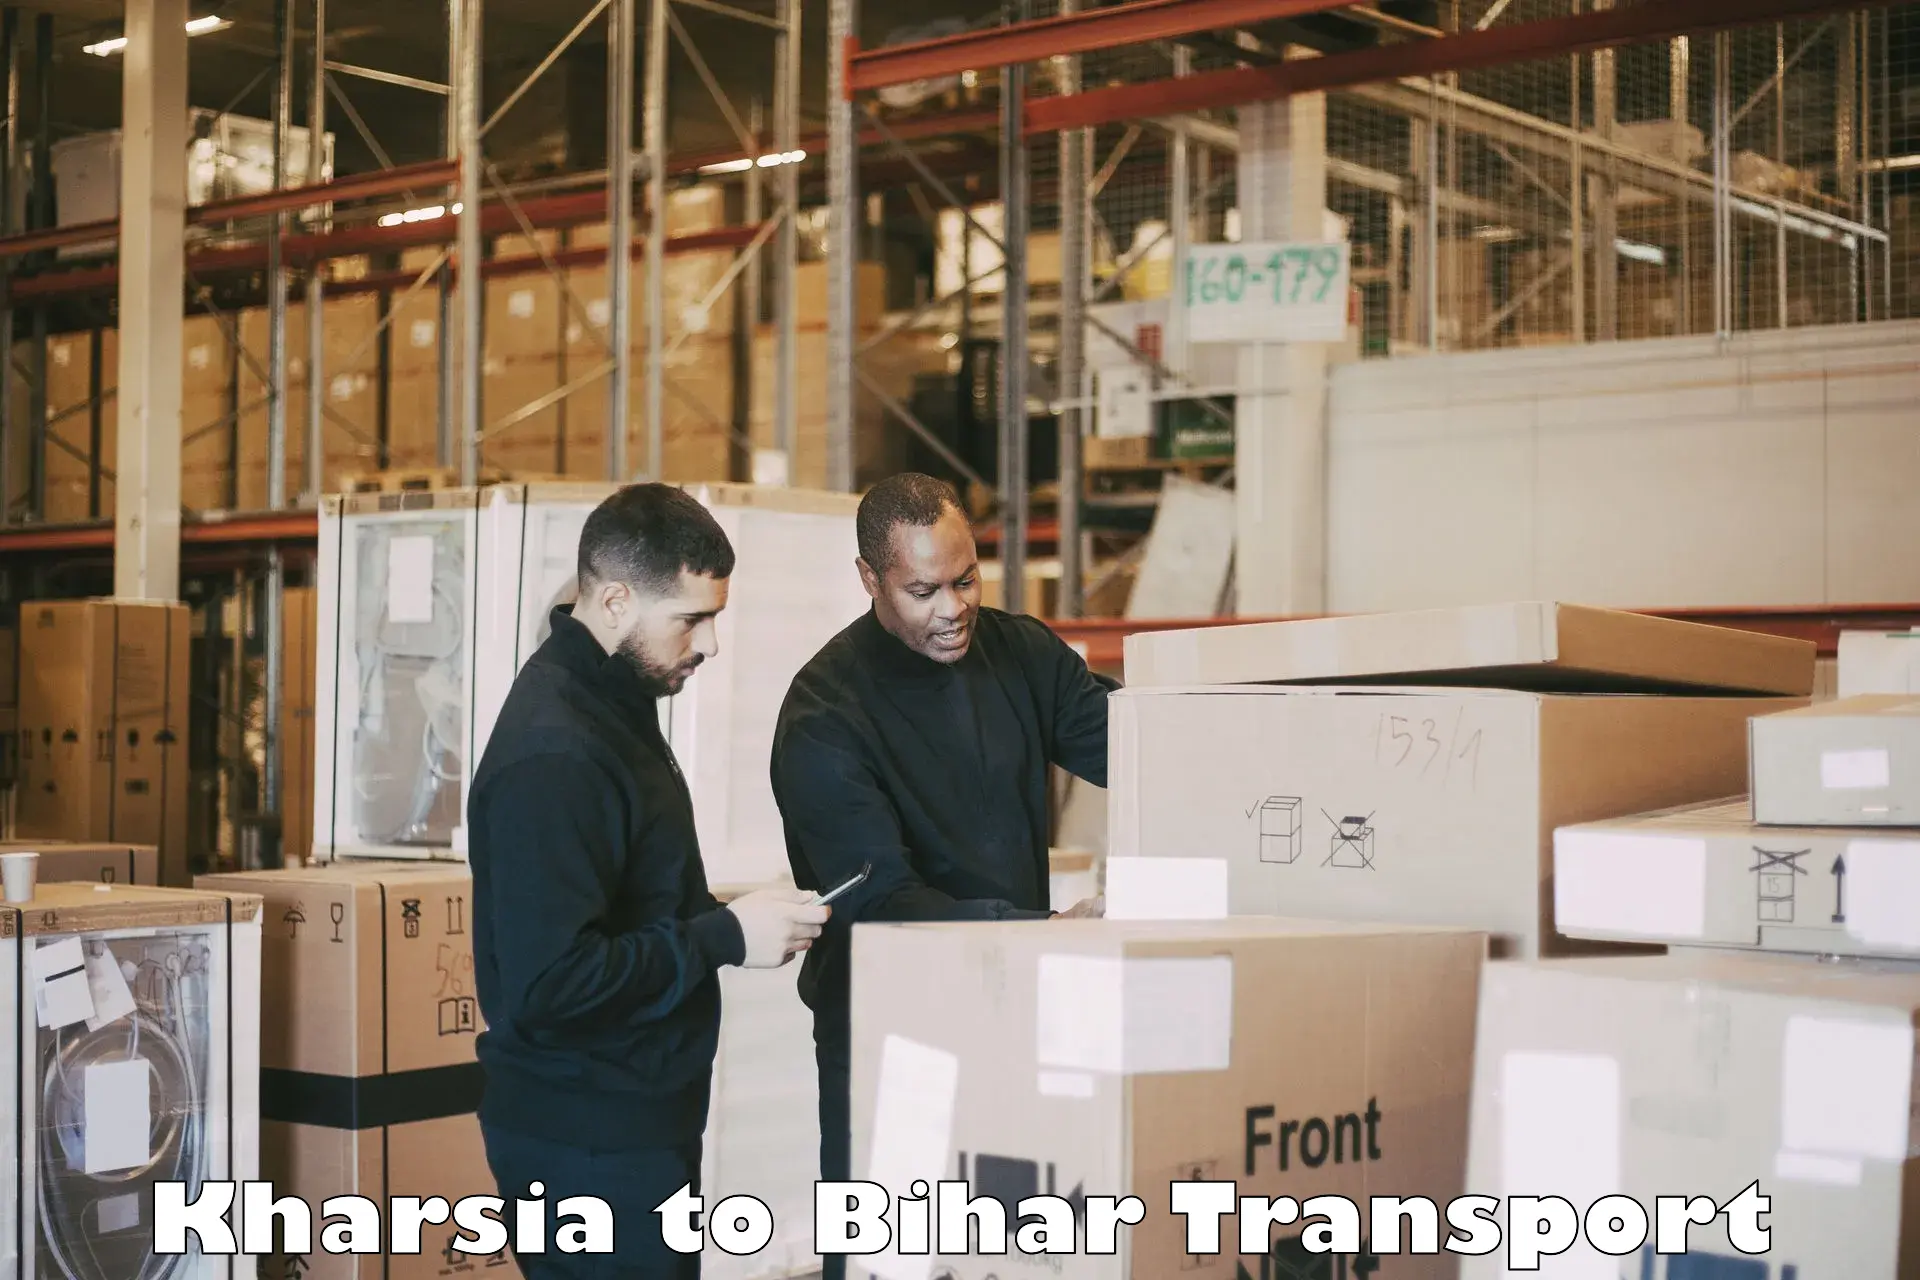 Nearest transport service Kharsia to Bankipore